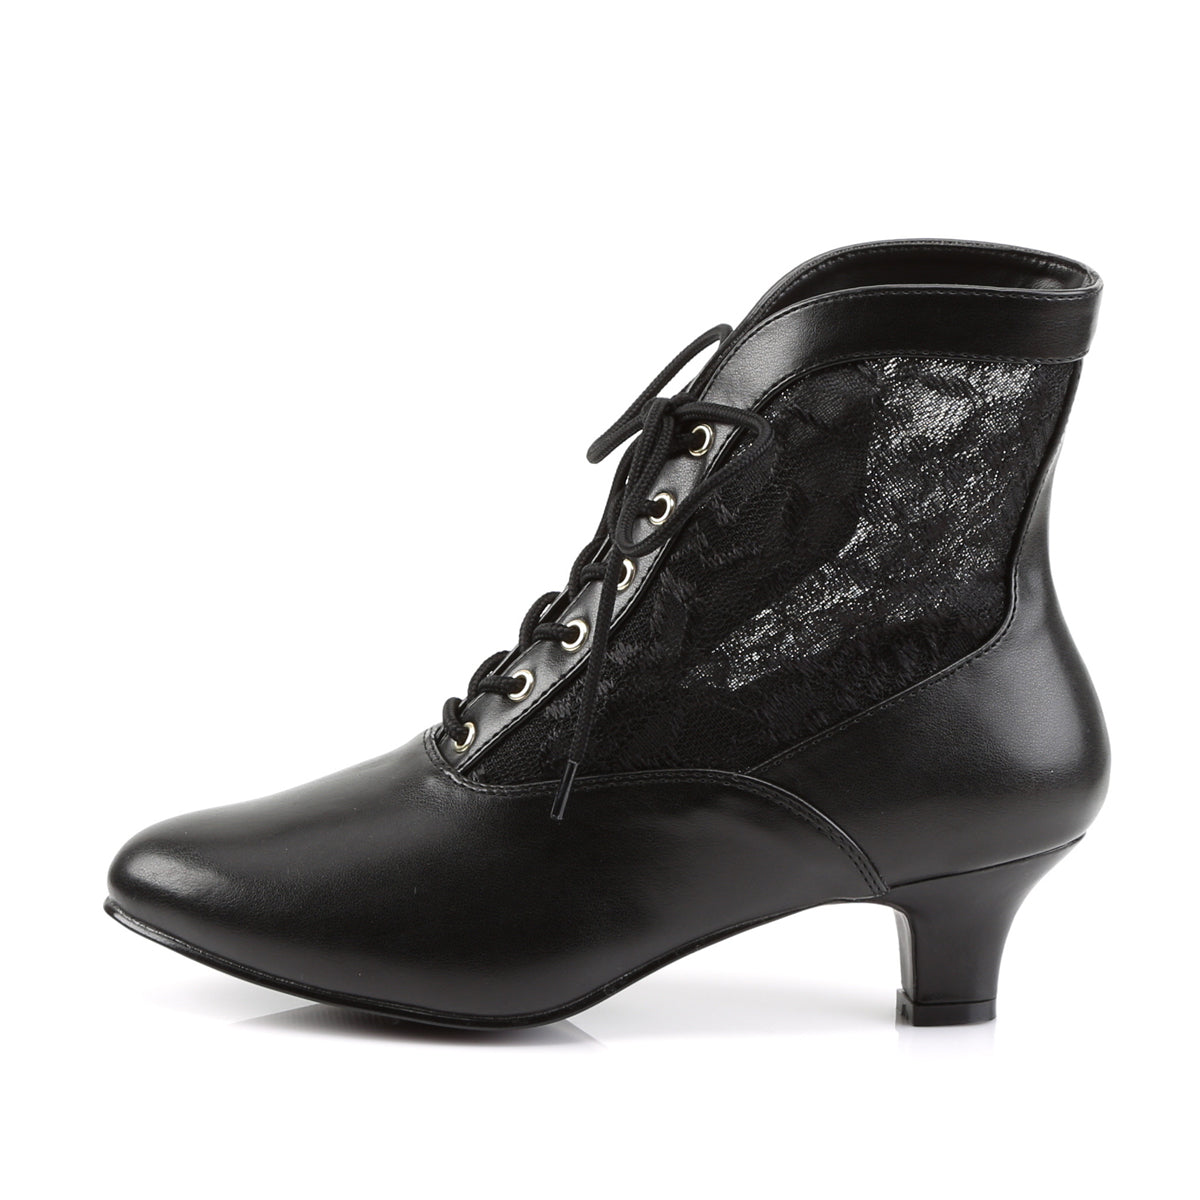 DAME-05 2 Inch Heel Black Women's Boots Funtasma Costume Shoes 